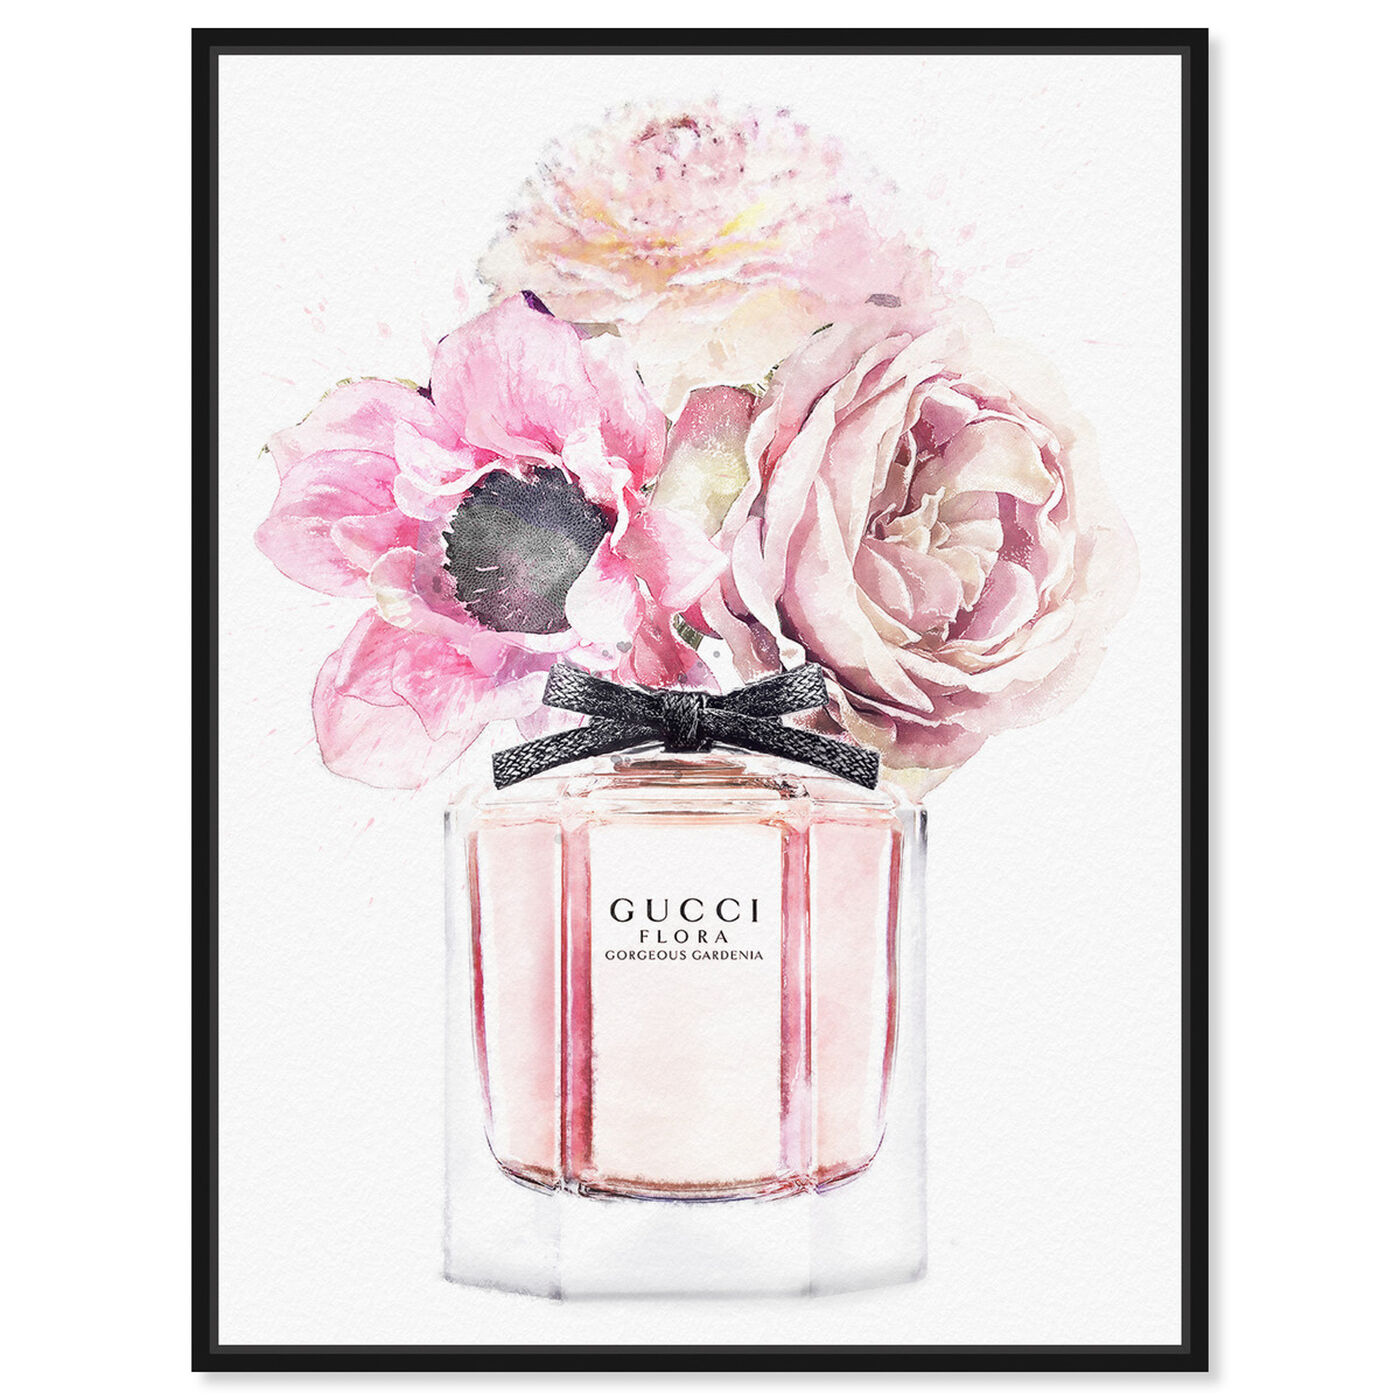 Oliver Gal 'Luxury Perfume Neon' Fashion Pink Wall Art Canvas Print - Bed  Bath & Beyond - 33003980